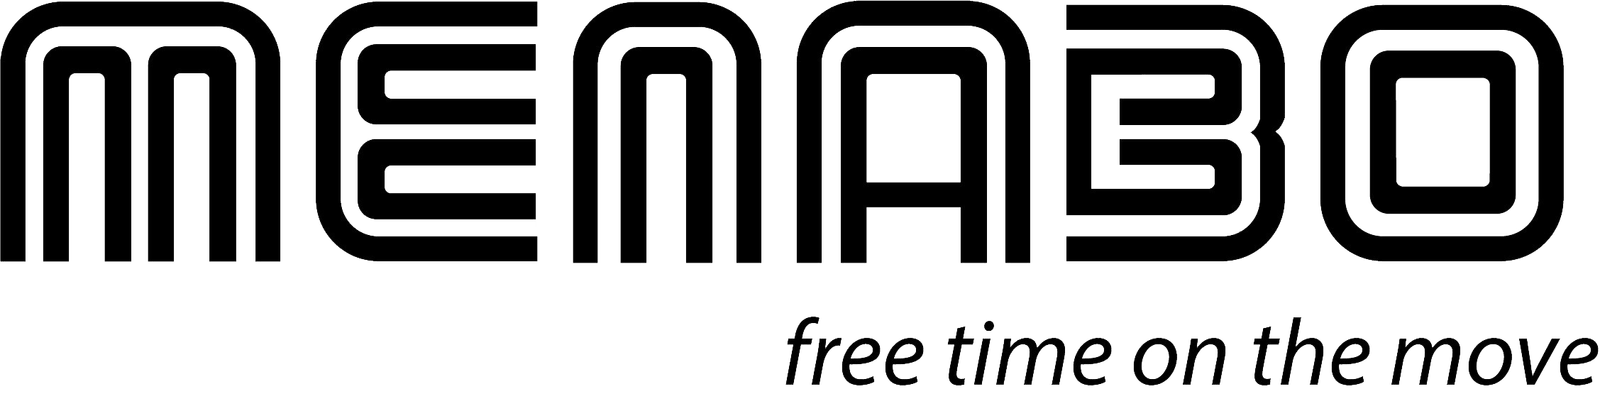 Menabo Logo